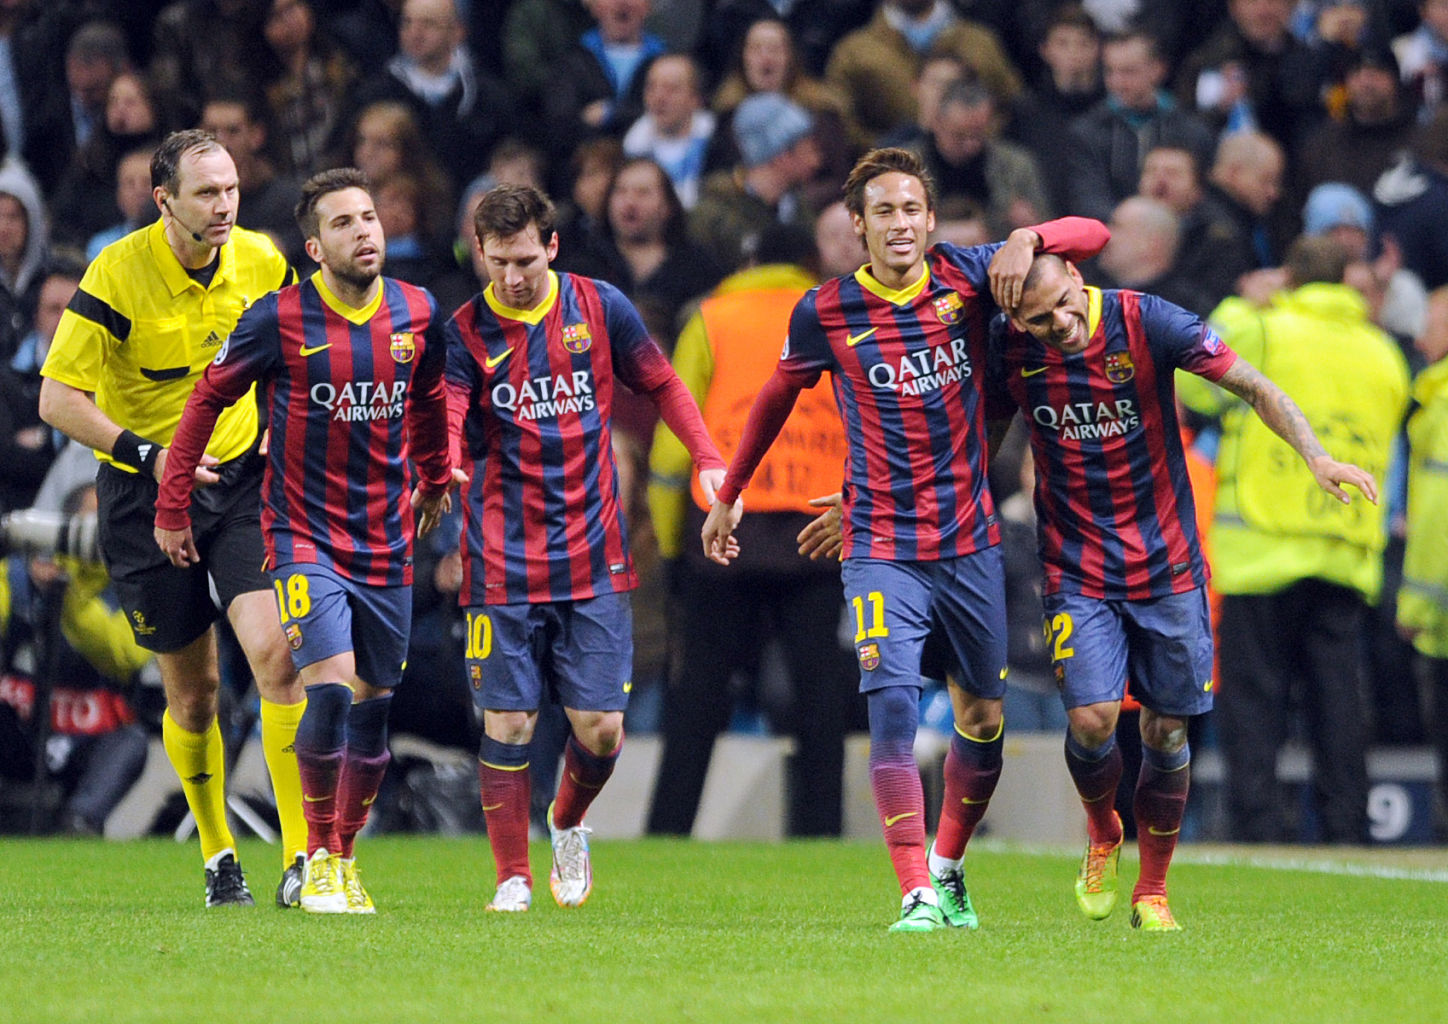 Jordi Alba, Messi, Neymar and Daniel Alves celebrate victory in England, in UCL gane night